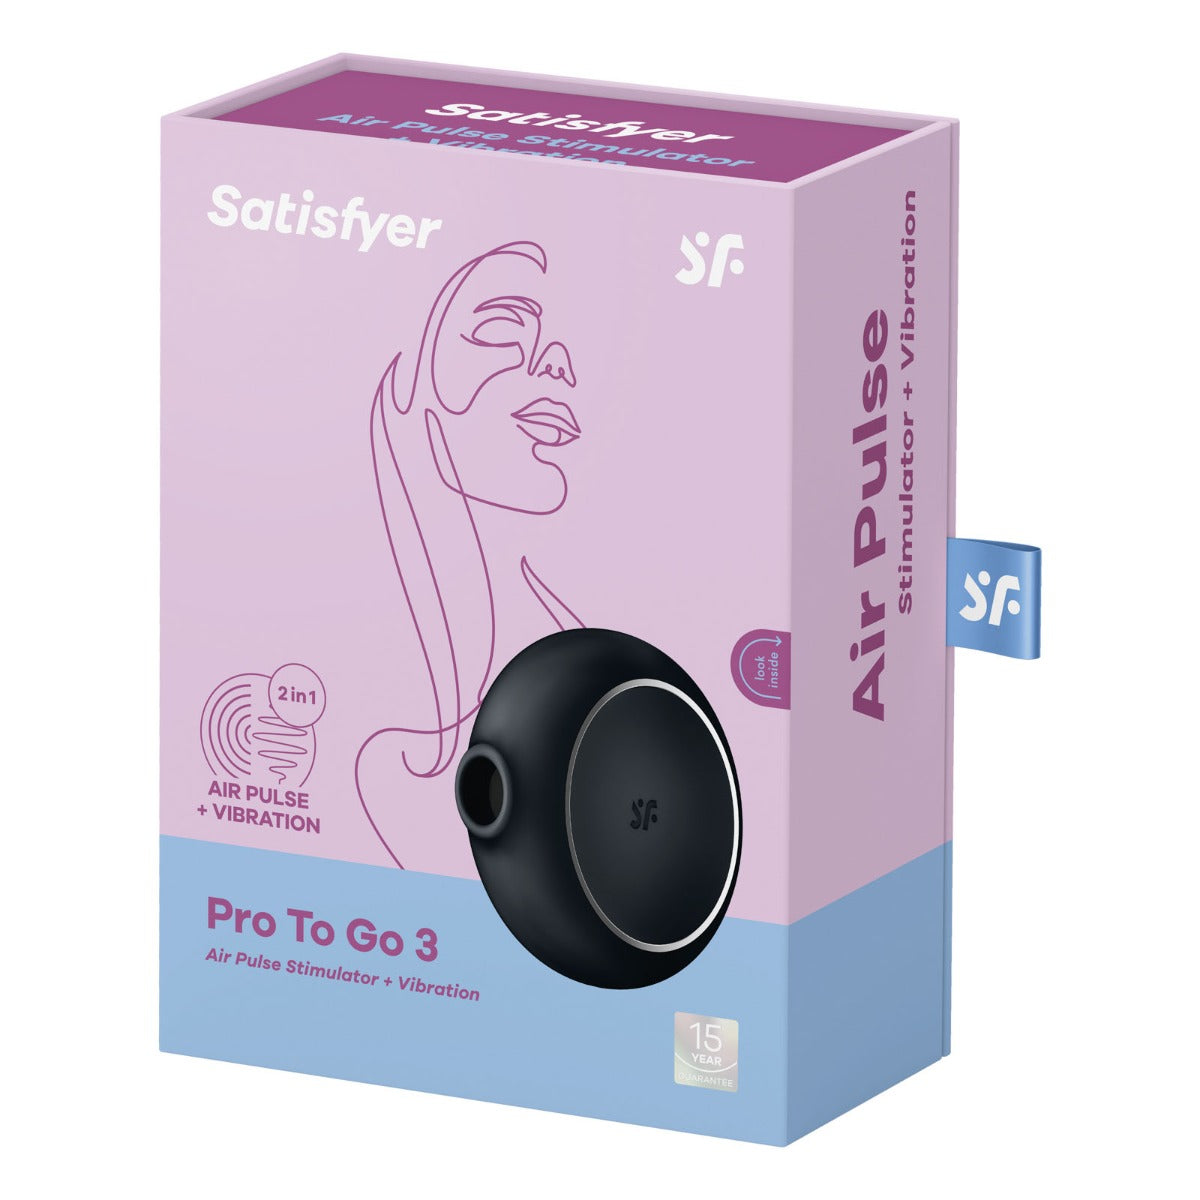 Satisfyer | Pro To Go 3 Air Pulse Vibrator - Black